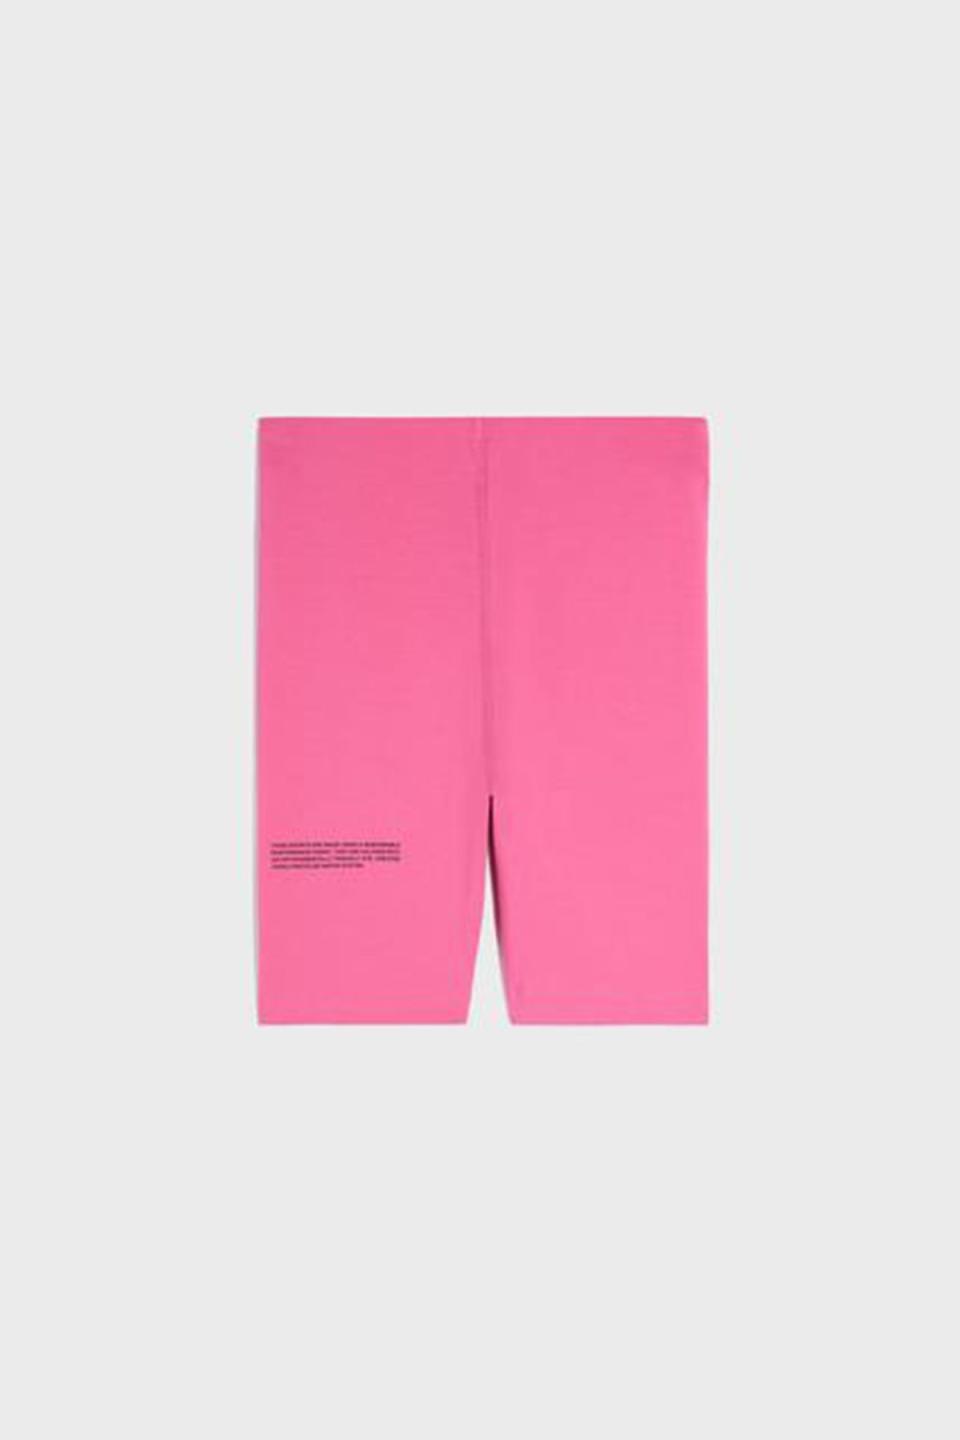 Move Bike Shorts in Flamingo Pink